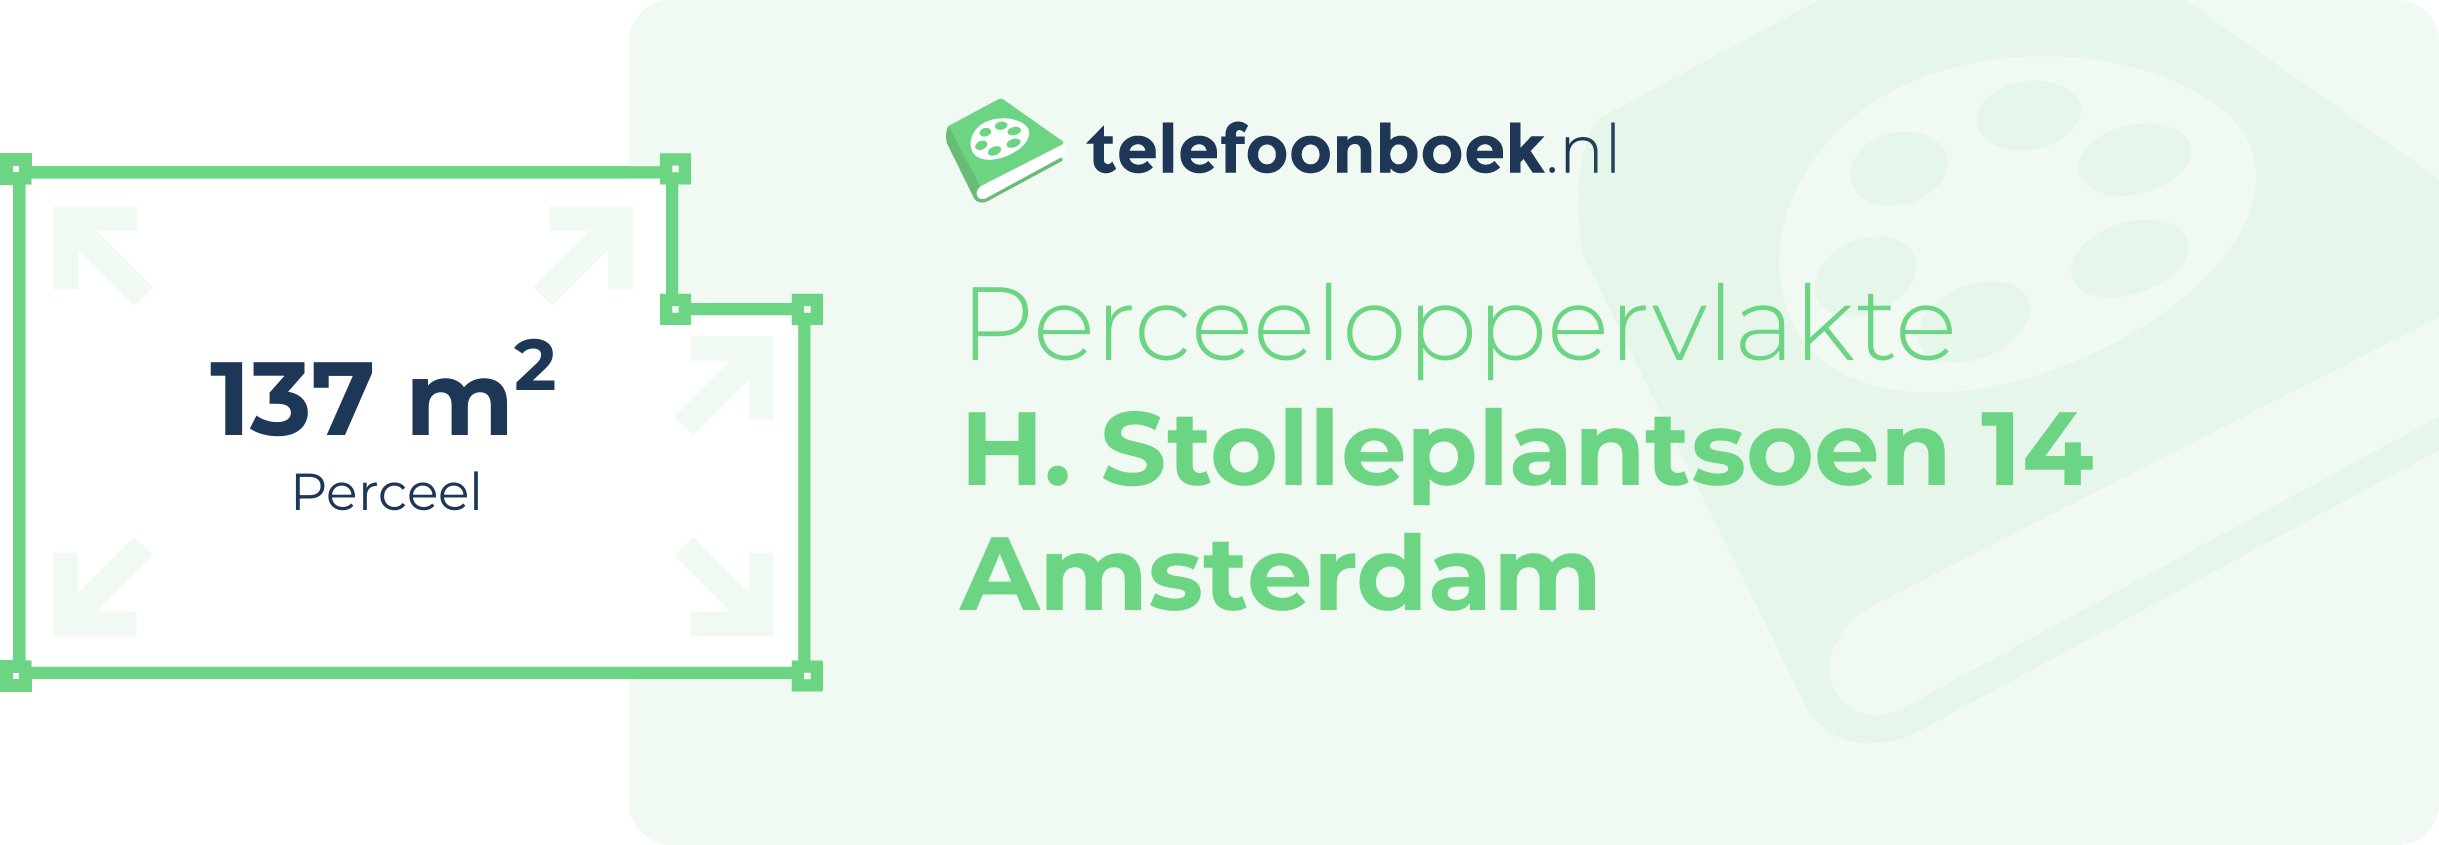 Perceeloppervlakte H. Stolleplantsoen 14 Amsterdam